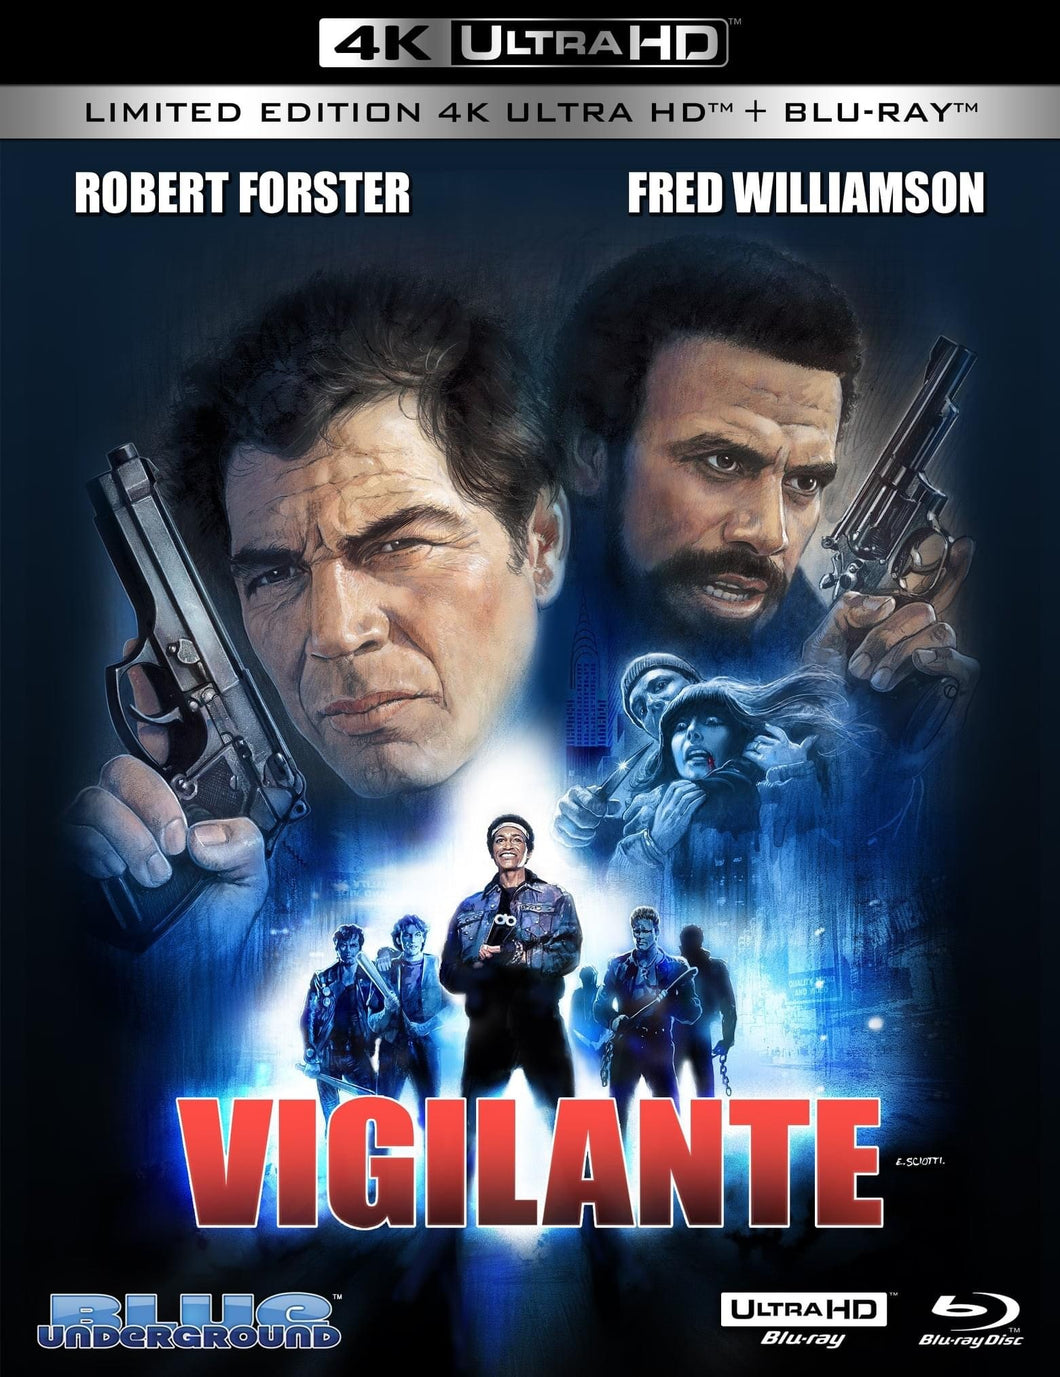 Vigilante 4K (1982) de William Lustig - front cover